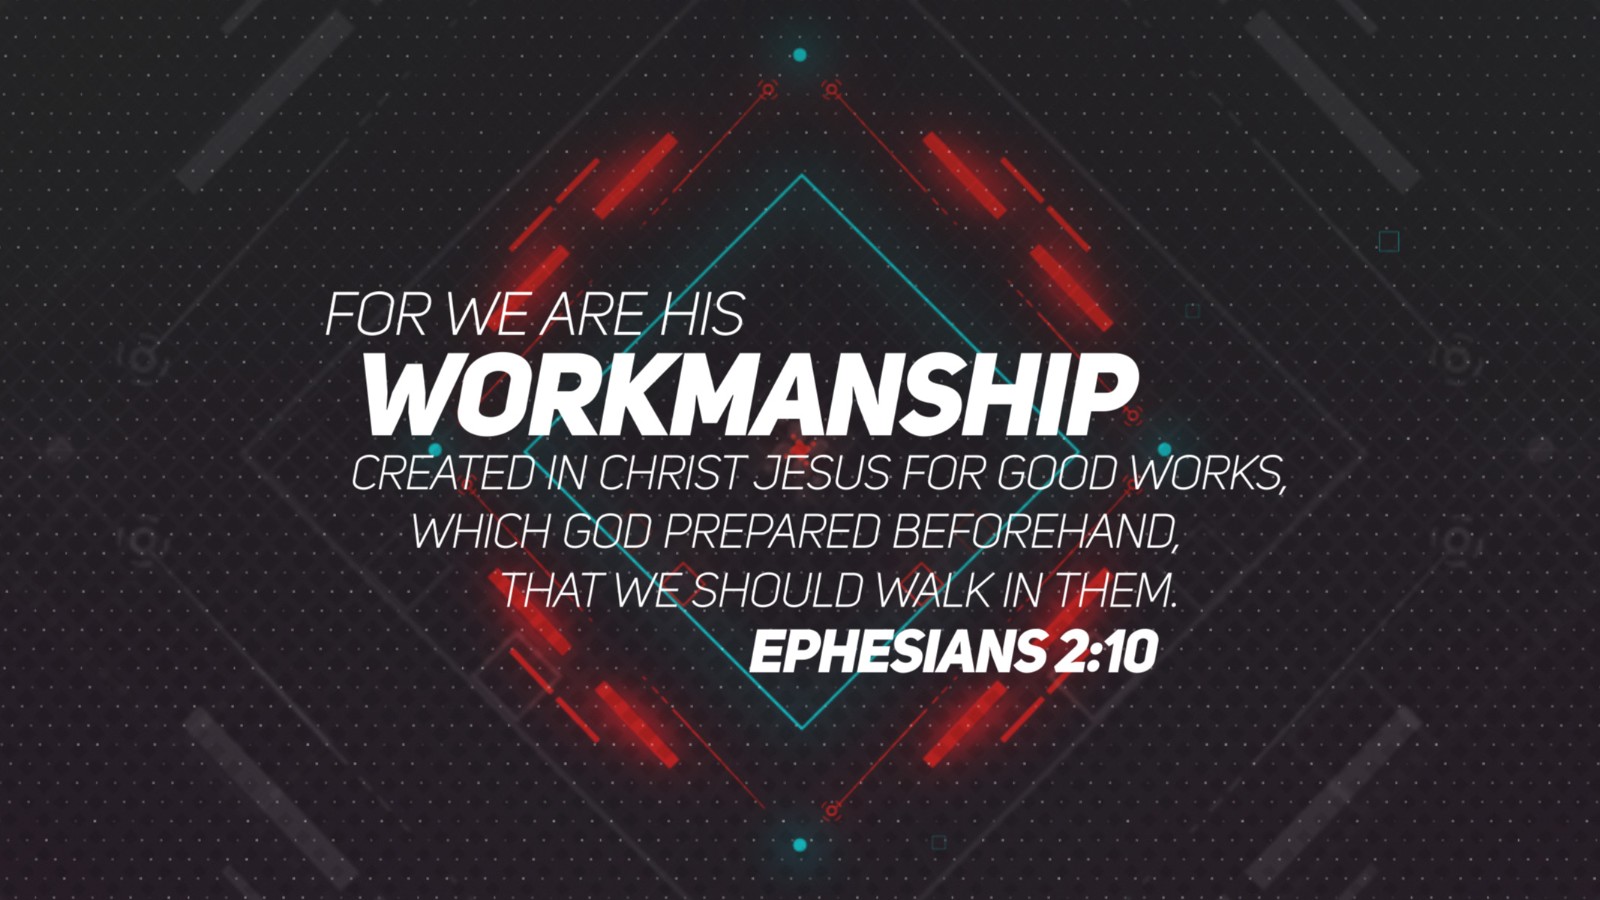 We Are His Workmanship (Ephesians 2:10)